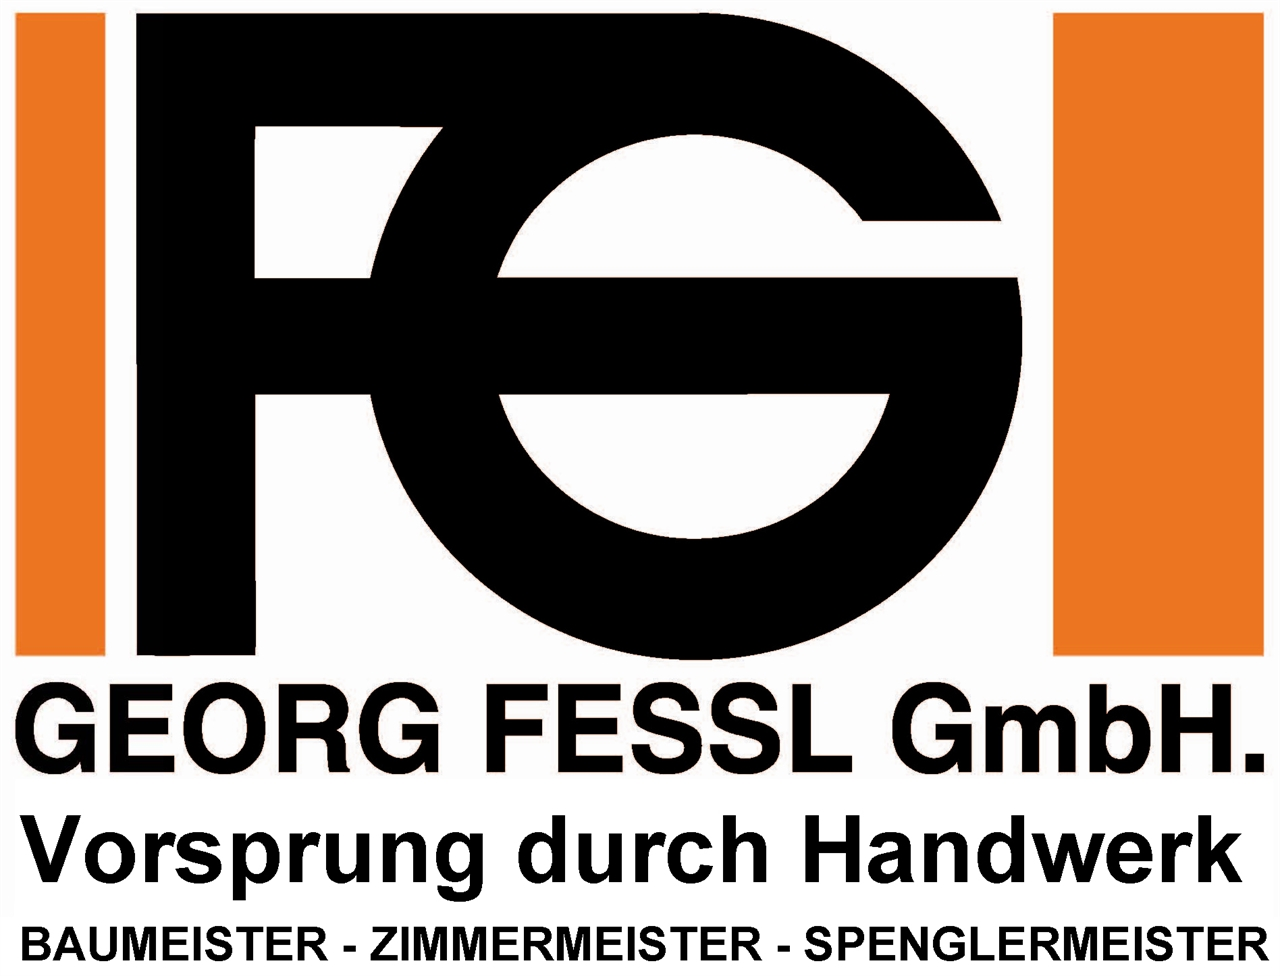 Georg Fessl GmbH.jpg